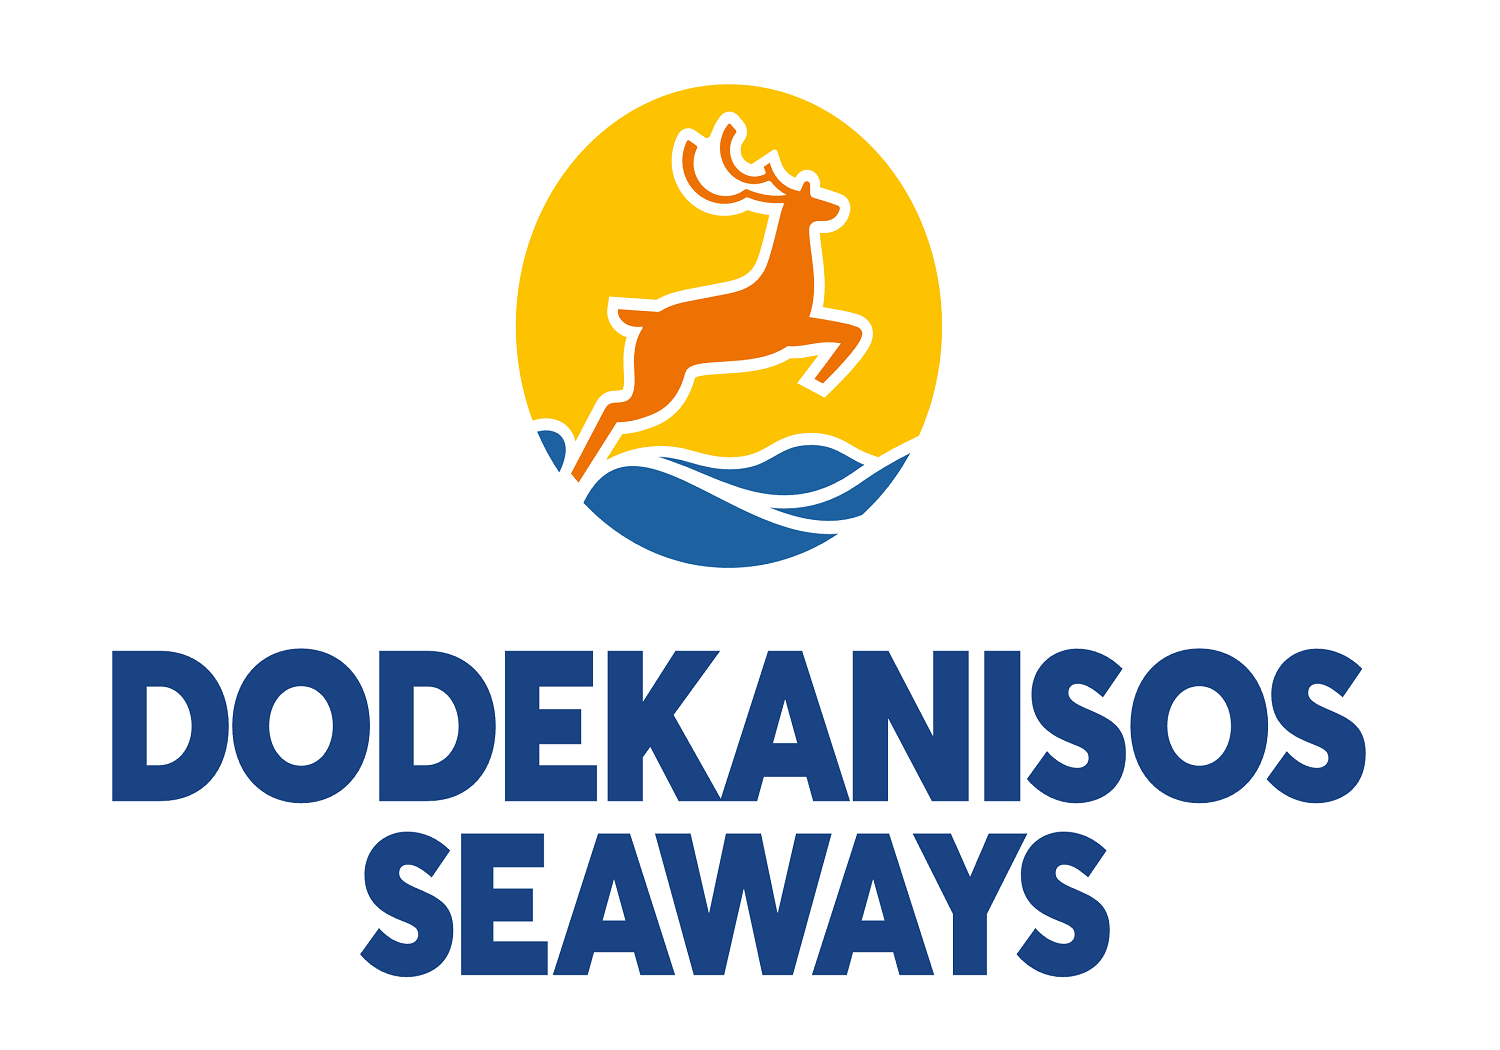 Dodekanisos Seaways: Έκτακτη διακομιδή βρέφους 8 ημερών και ενός ενήλικου ασθενή από τη Σύμη στη Ρόδο - e-Nautilia.gr | Το Ελληνικό Portal για την Ναυτιλία. Τελευταία νέα, άρθρα, Οπτικοακουστικό Υλικό